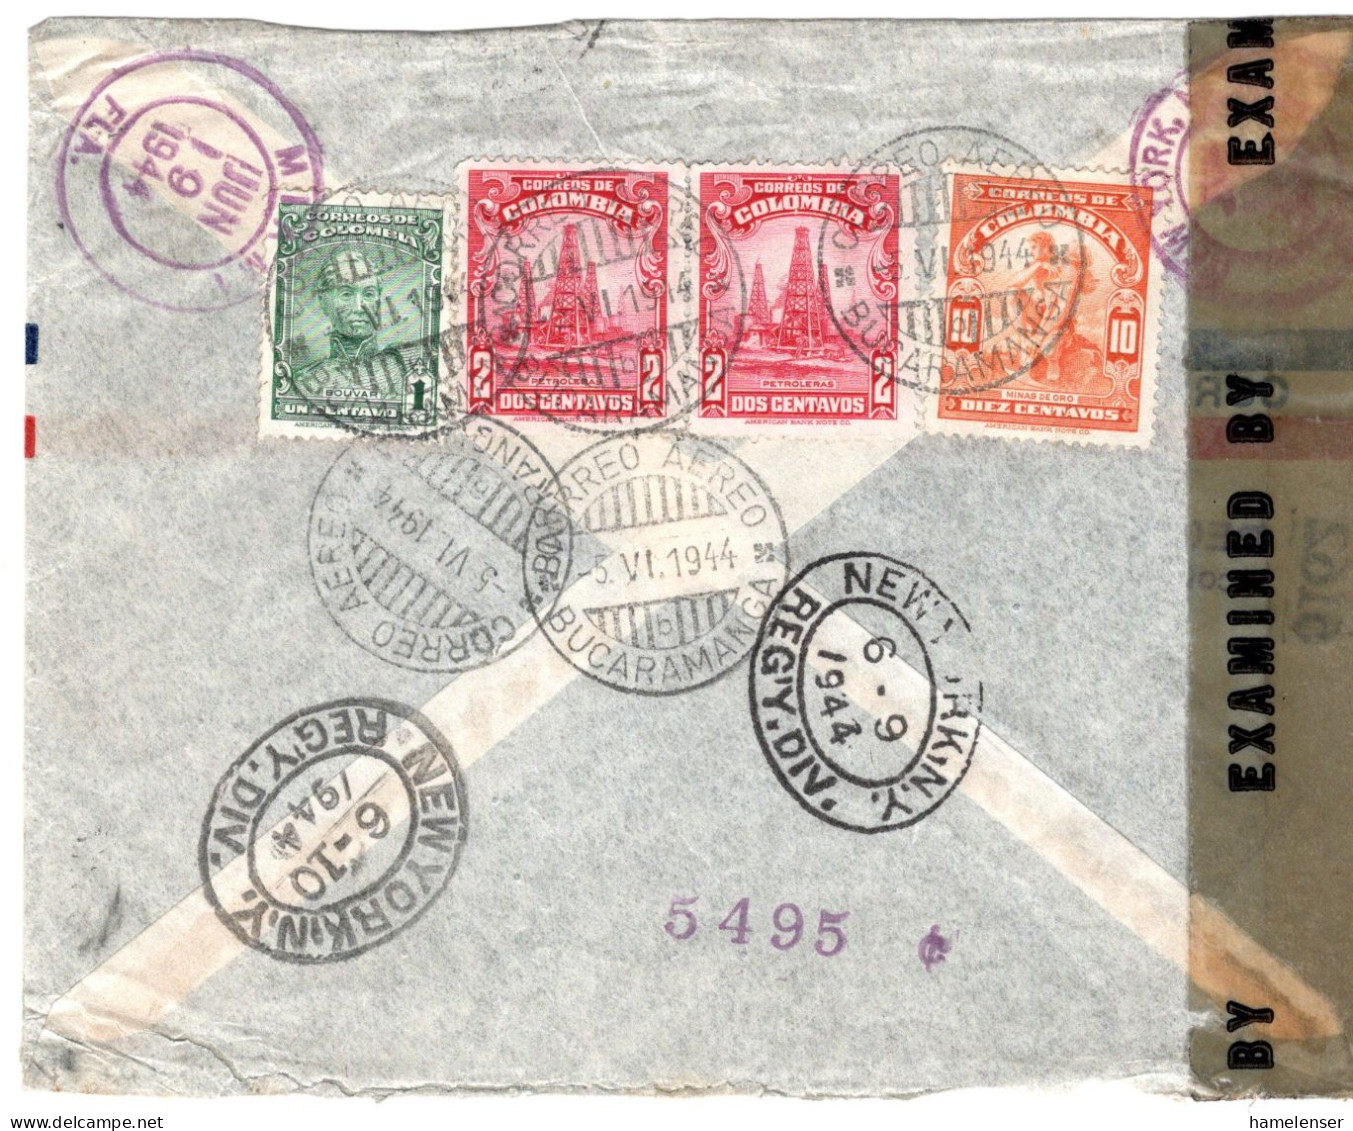 68144 - Kolumbien - 1943 - 50c Luftpost MiF A R-LpBf BUCAMARANGA -> BARRANQUILLA -> BOGOTA -> NEW YORK (USA) M US-Zensur - Kolumbien